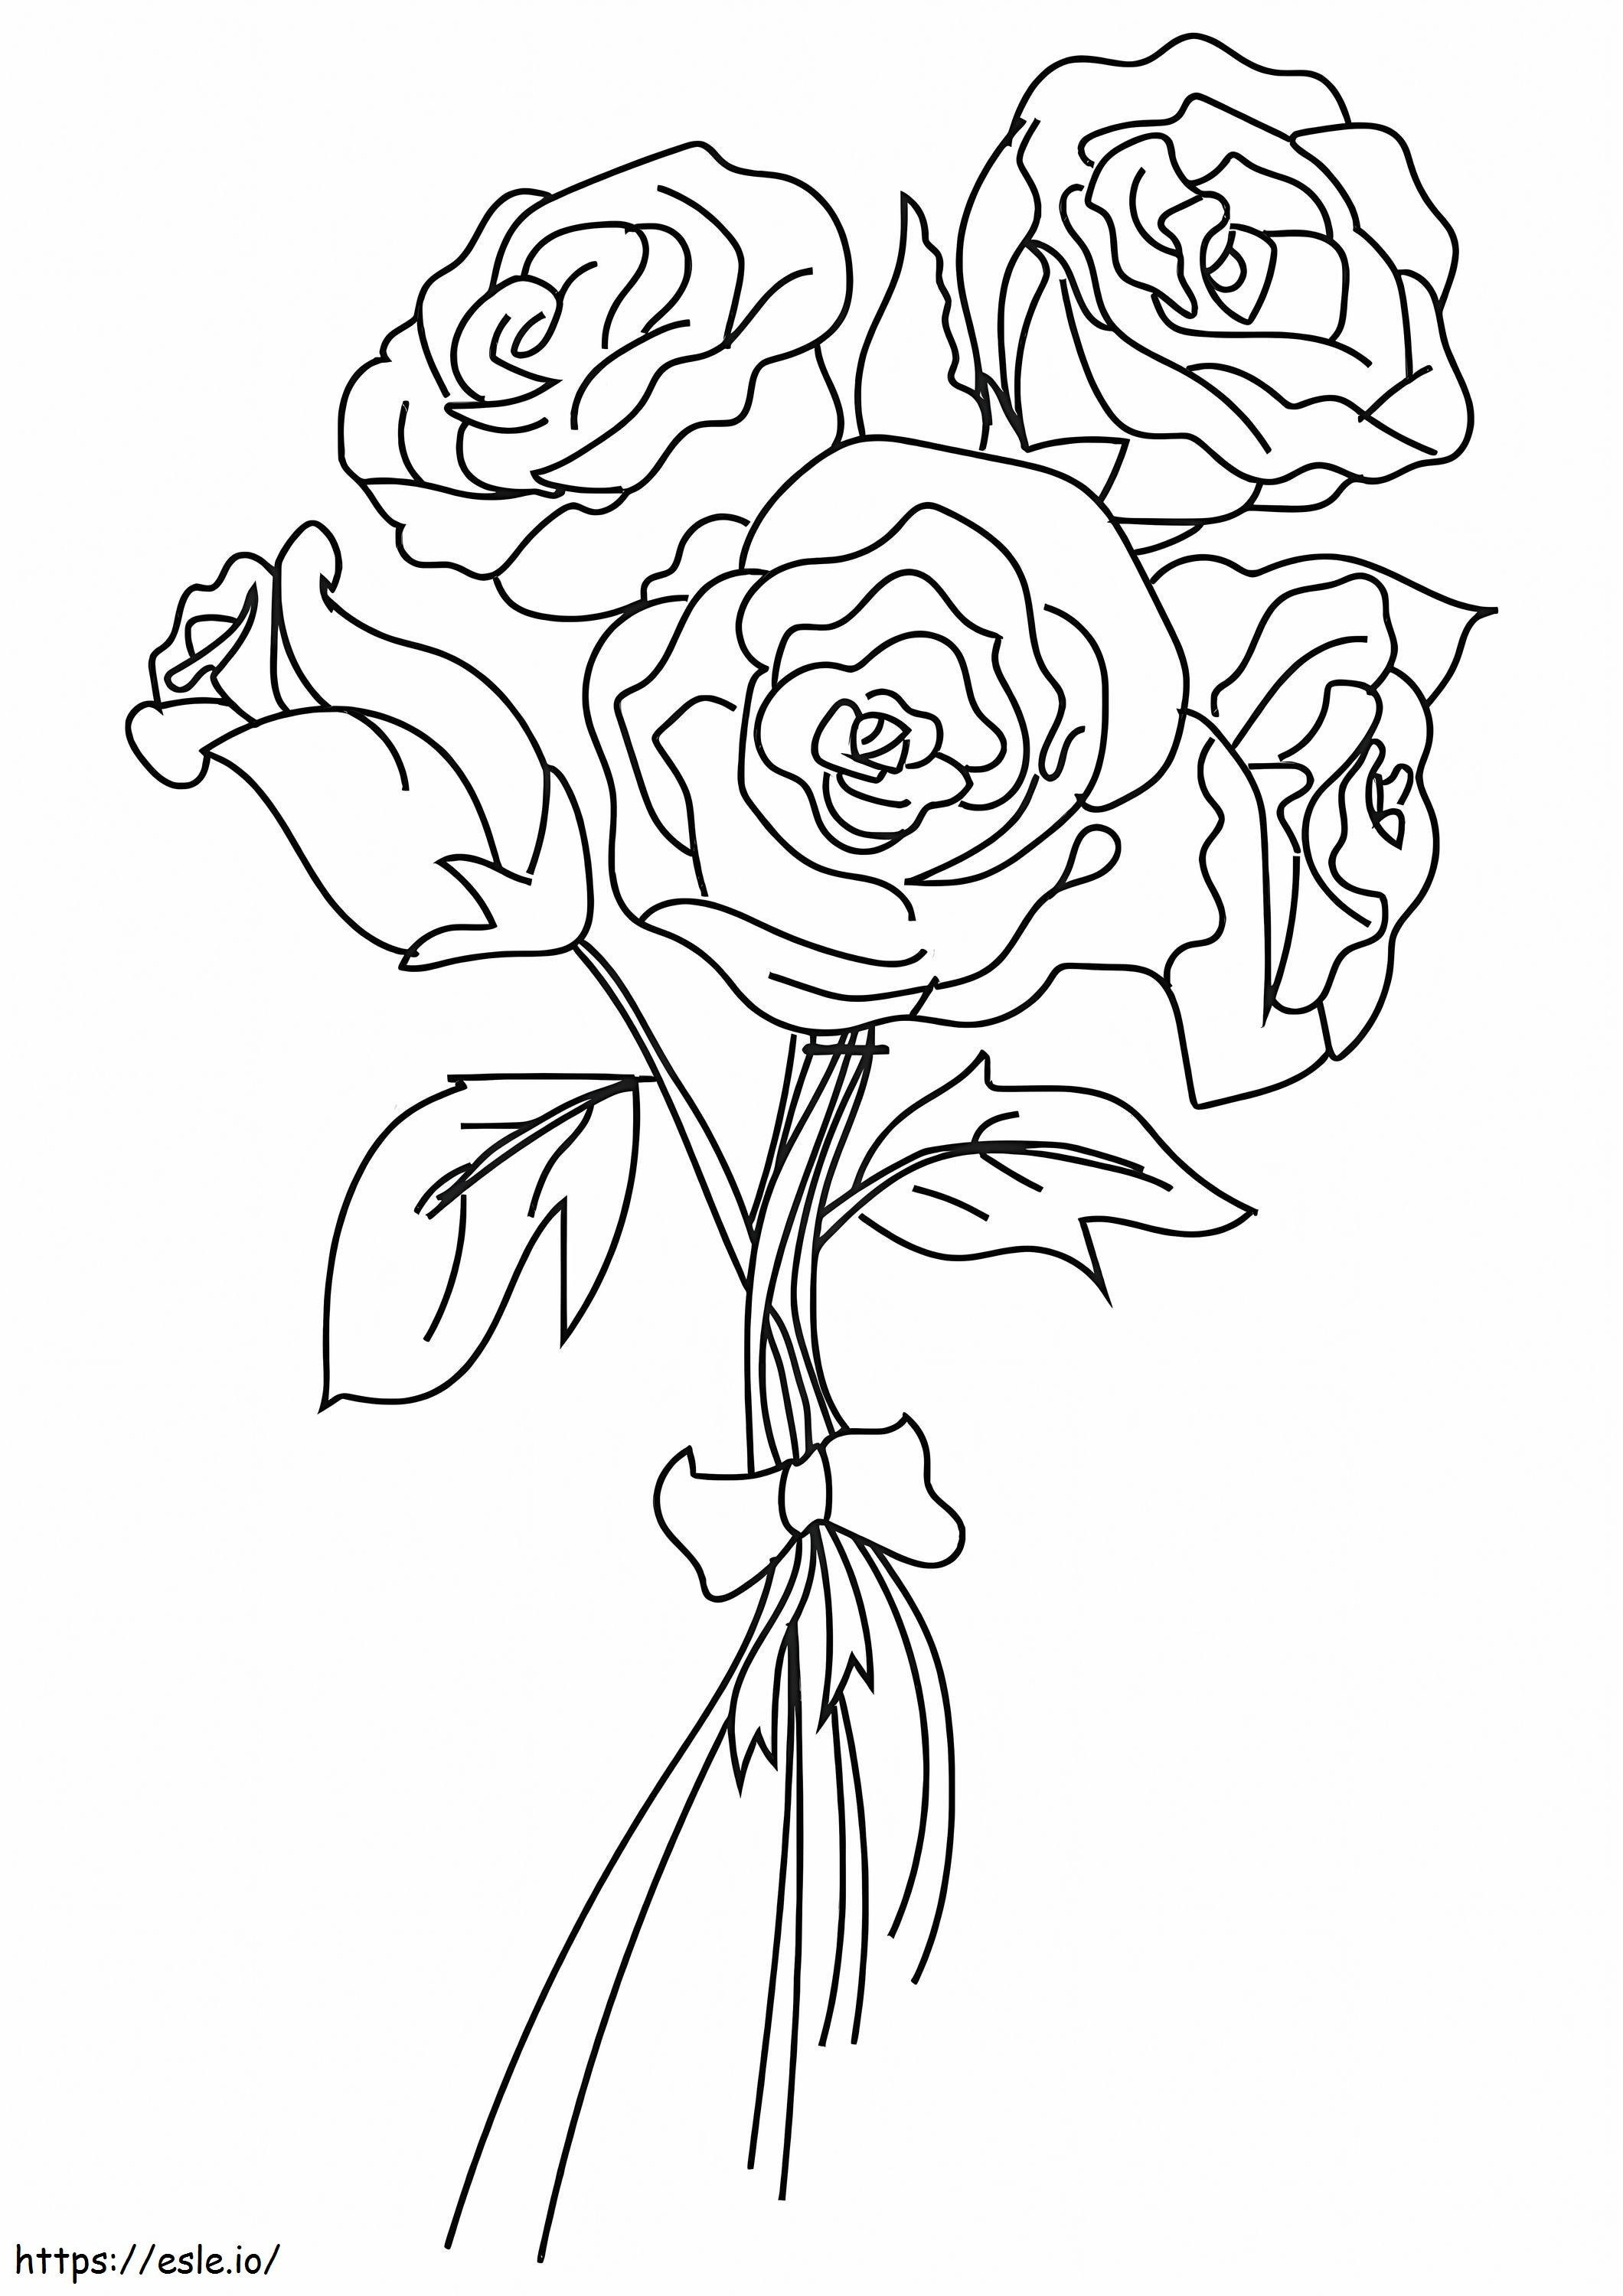 Buquê de rosas simples para colorir